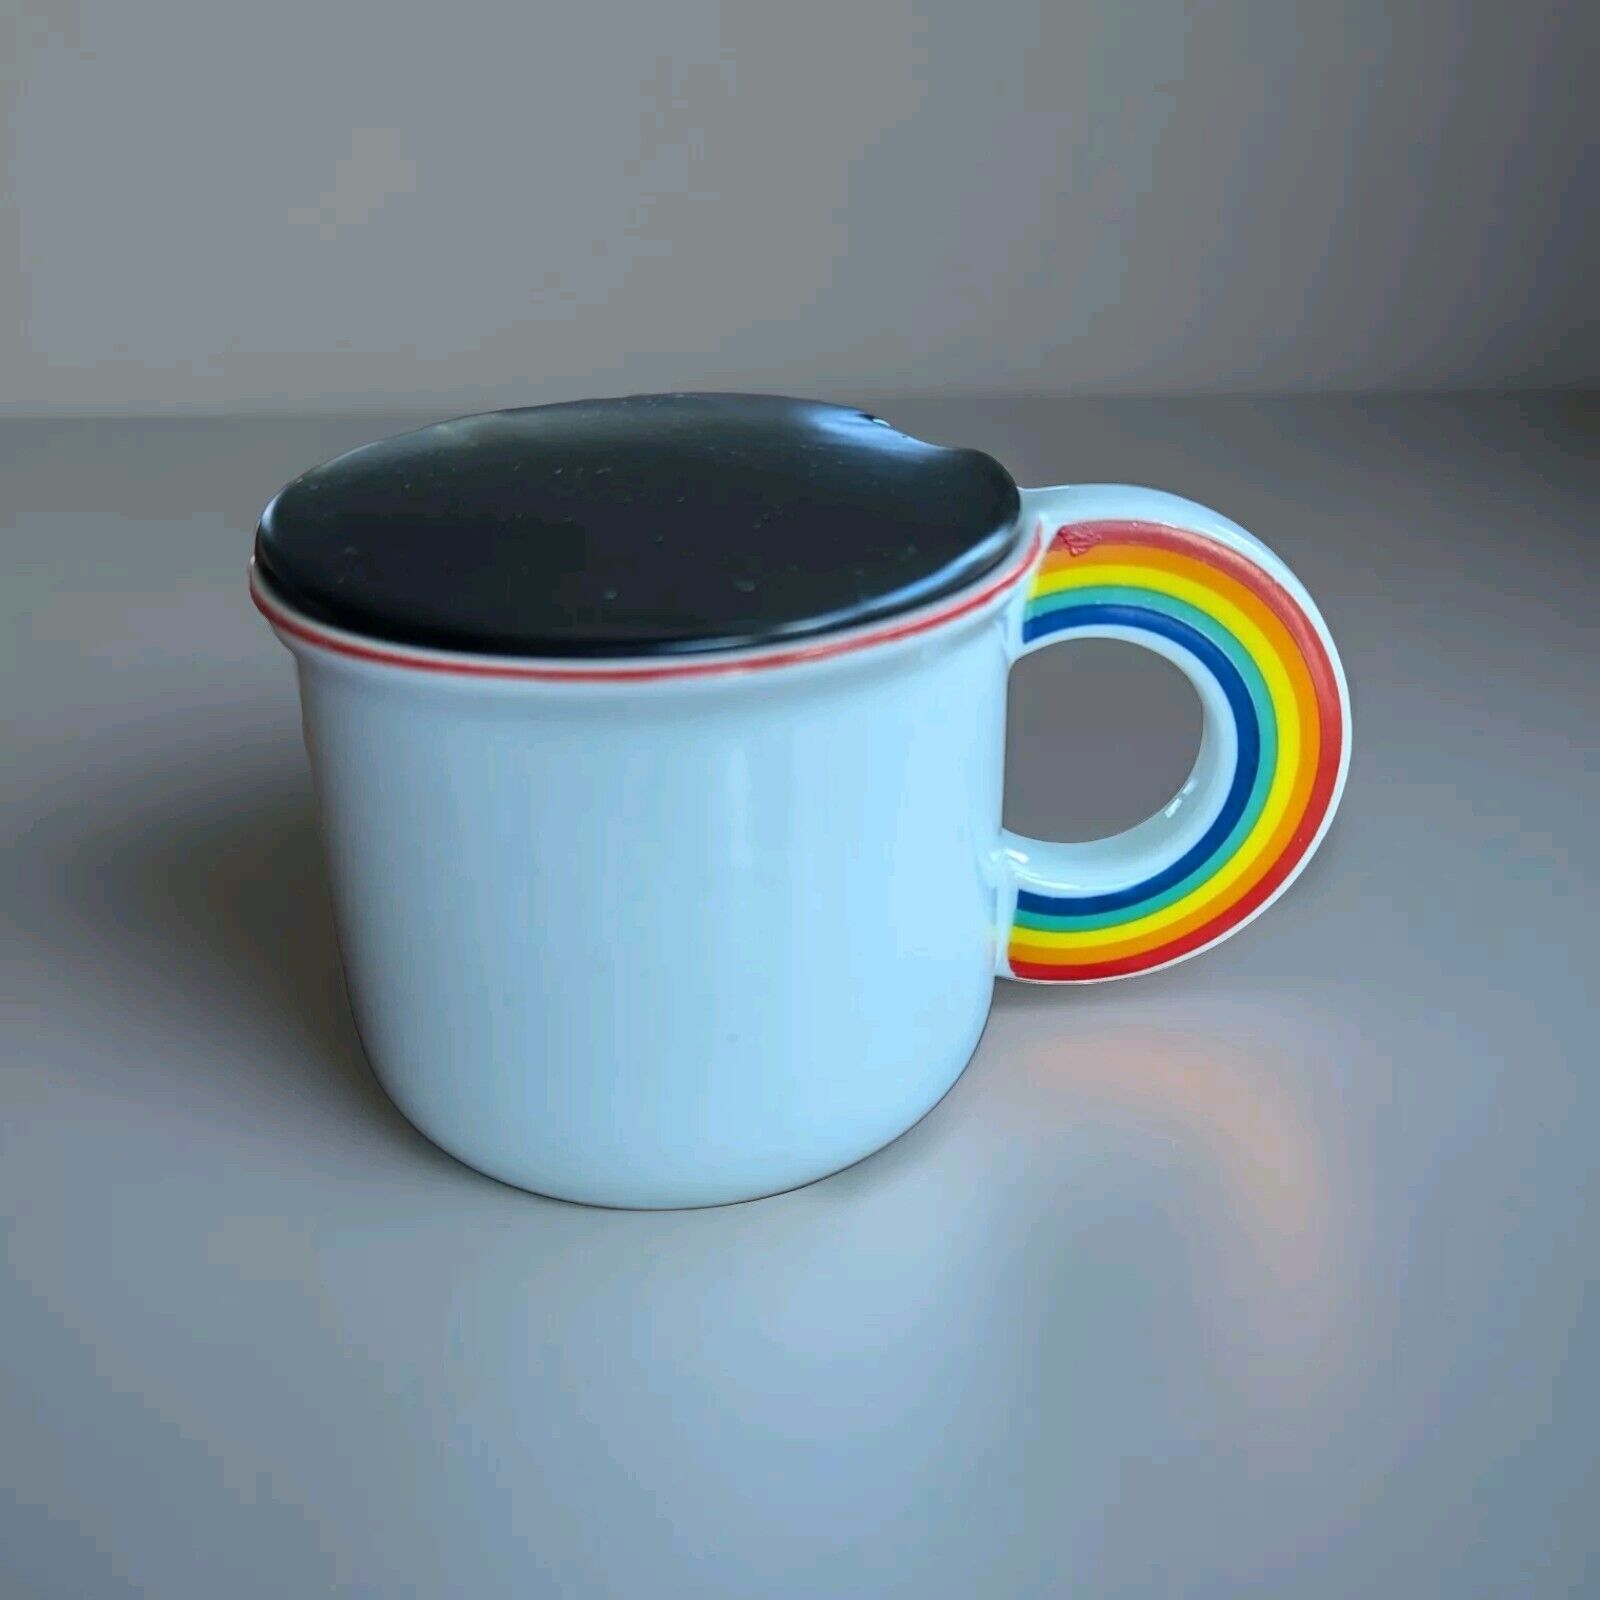 Vintage Vandor Rainbow Handle Mug 1978 White Coffee Tea Cup With Lid Excellent